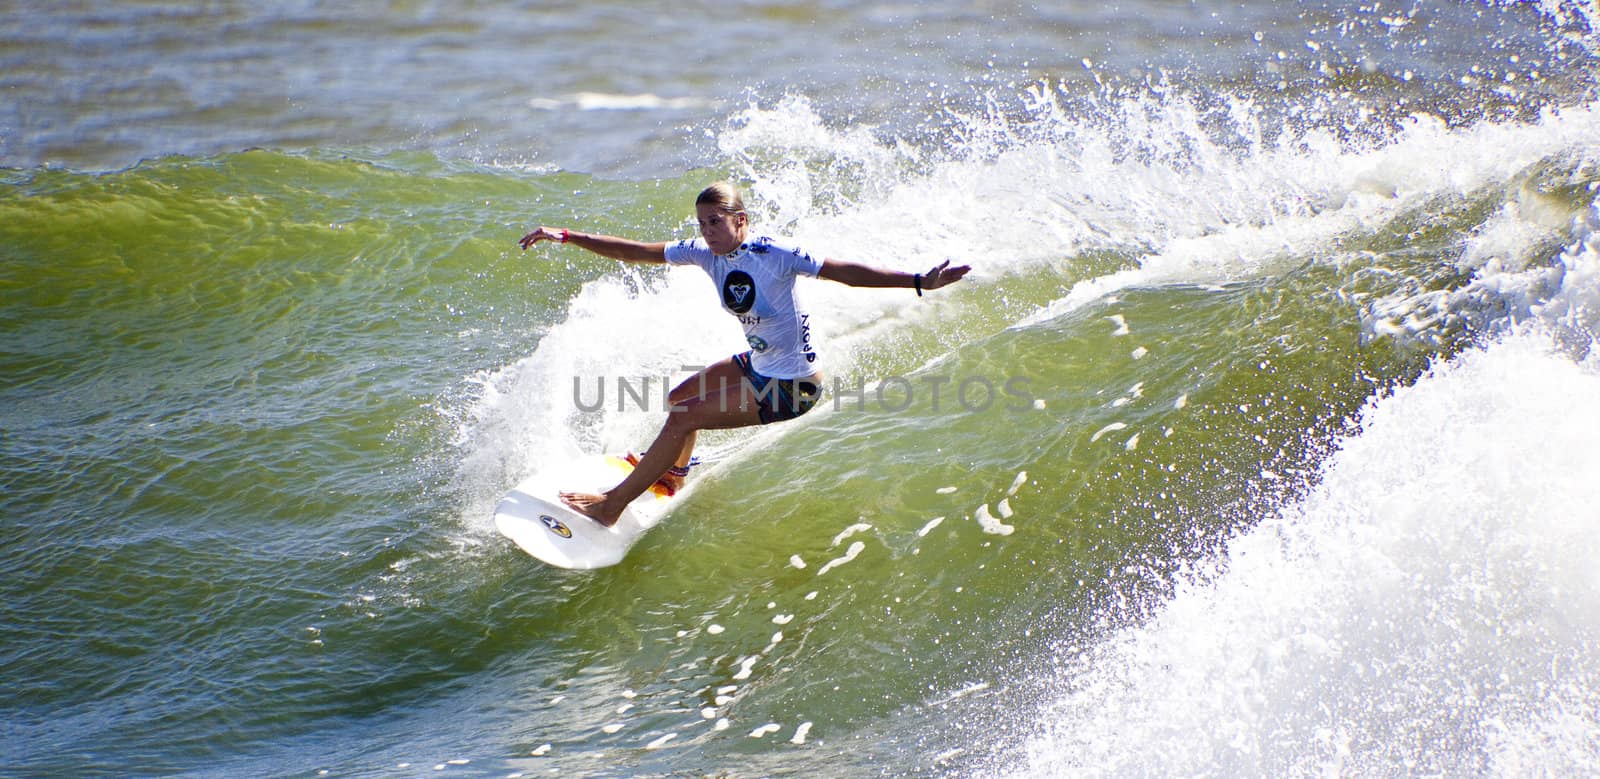 Surfing by Imagecom